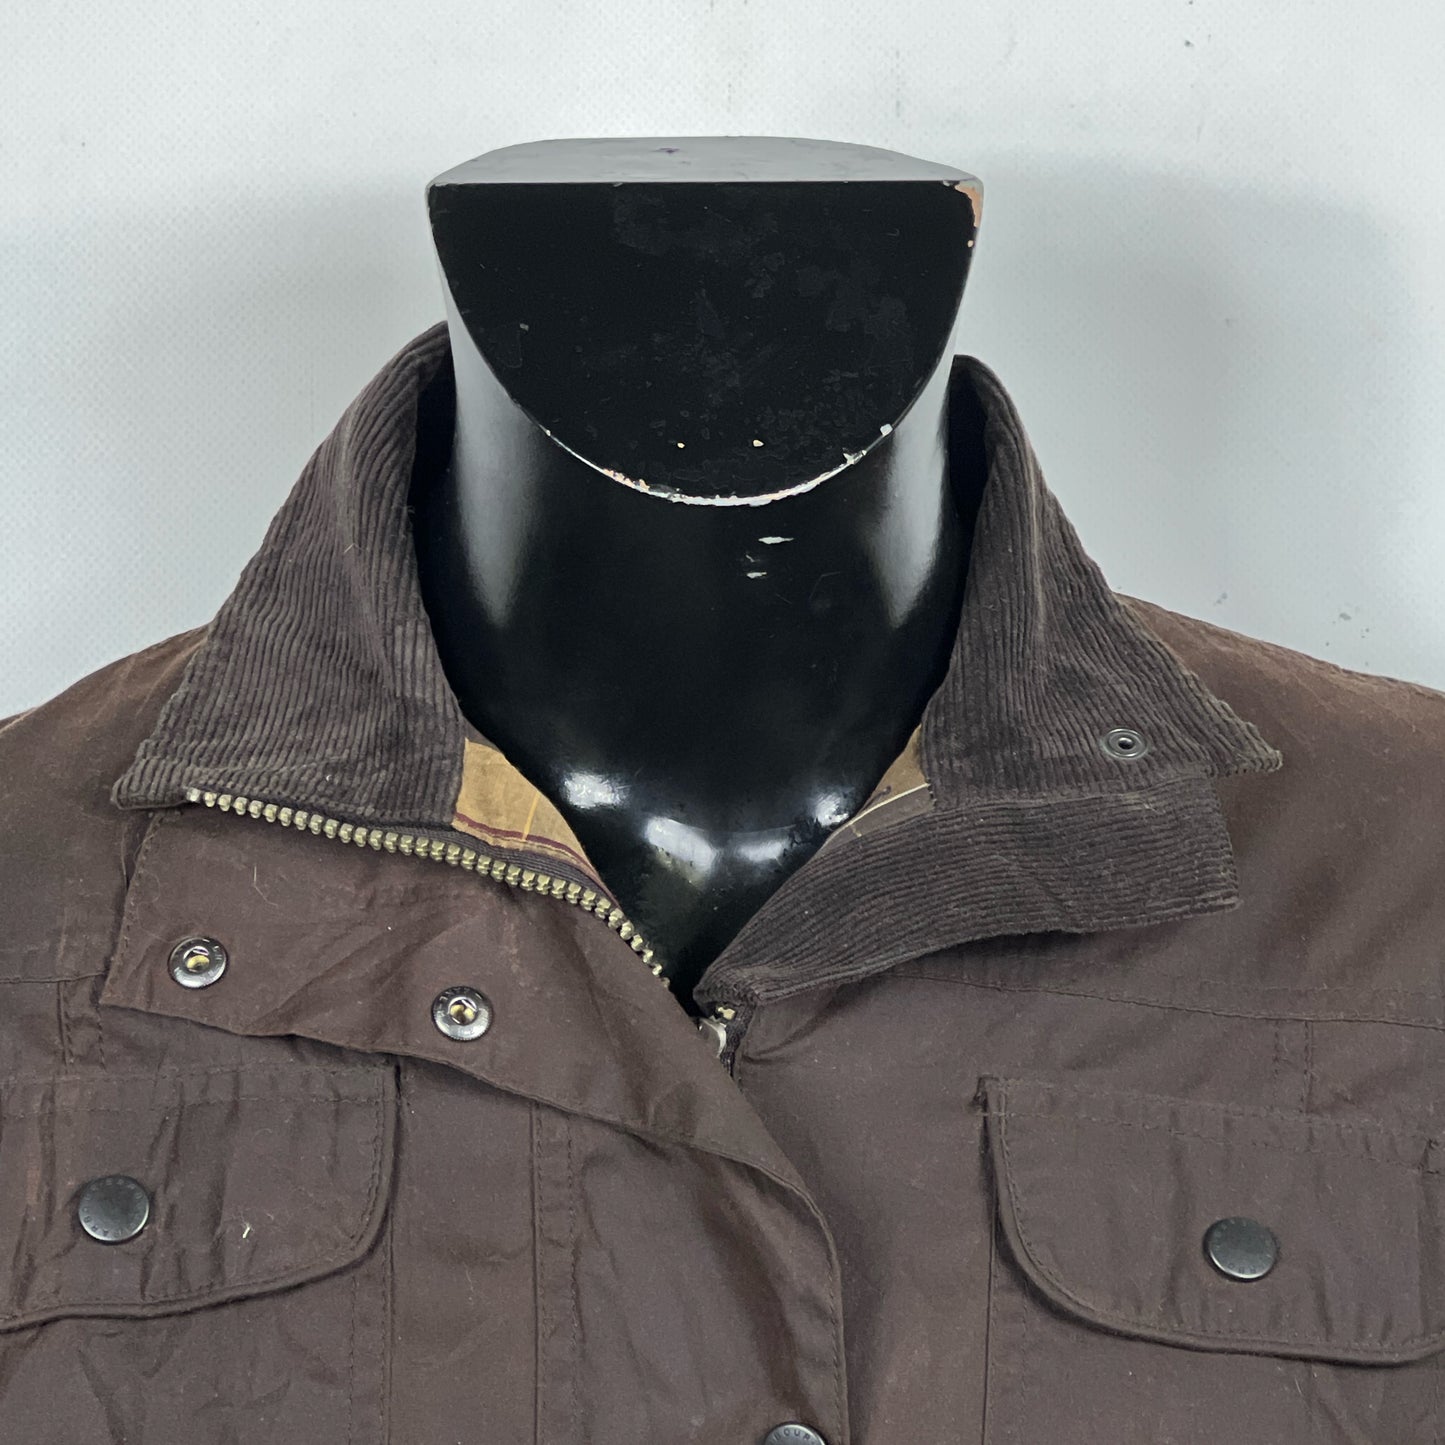 Giacca Barbour marrone corta leggera unisex UK18 Tg.46 Brown light wax Jacket UK18